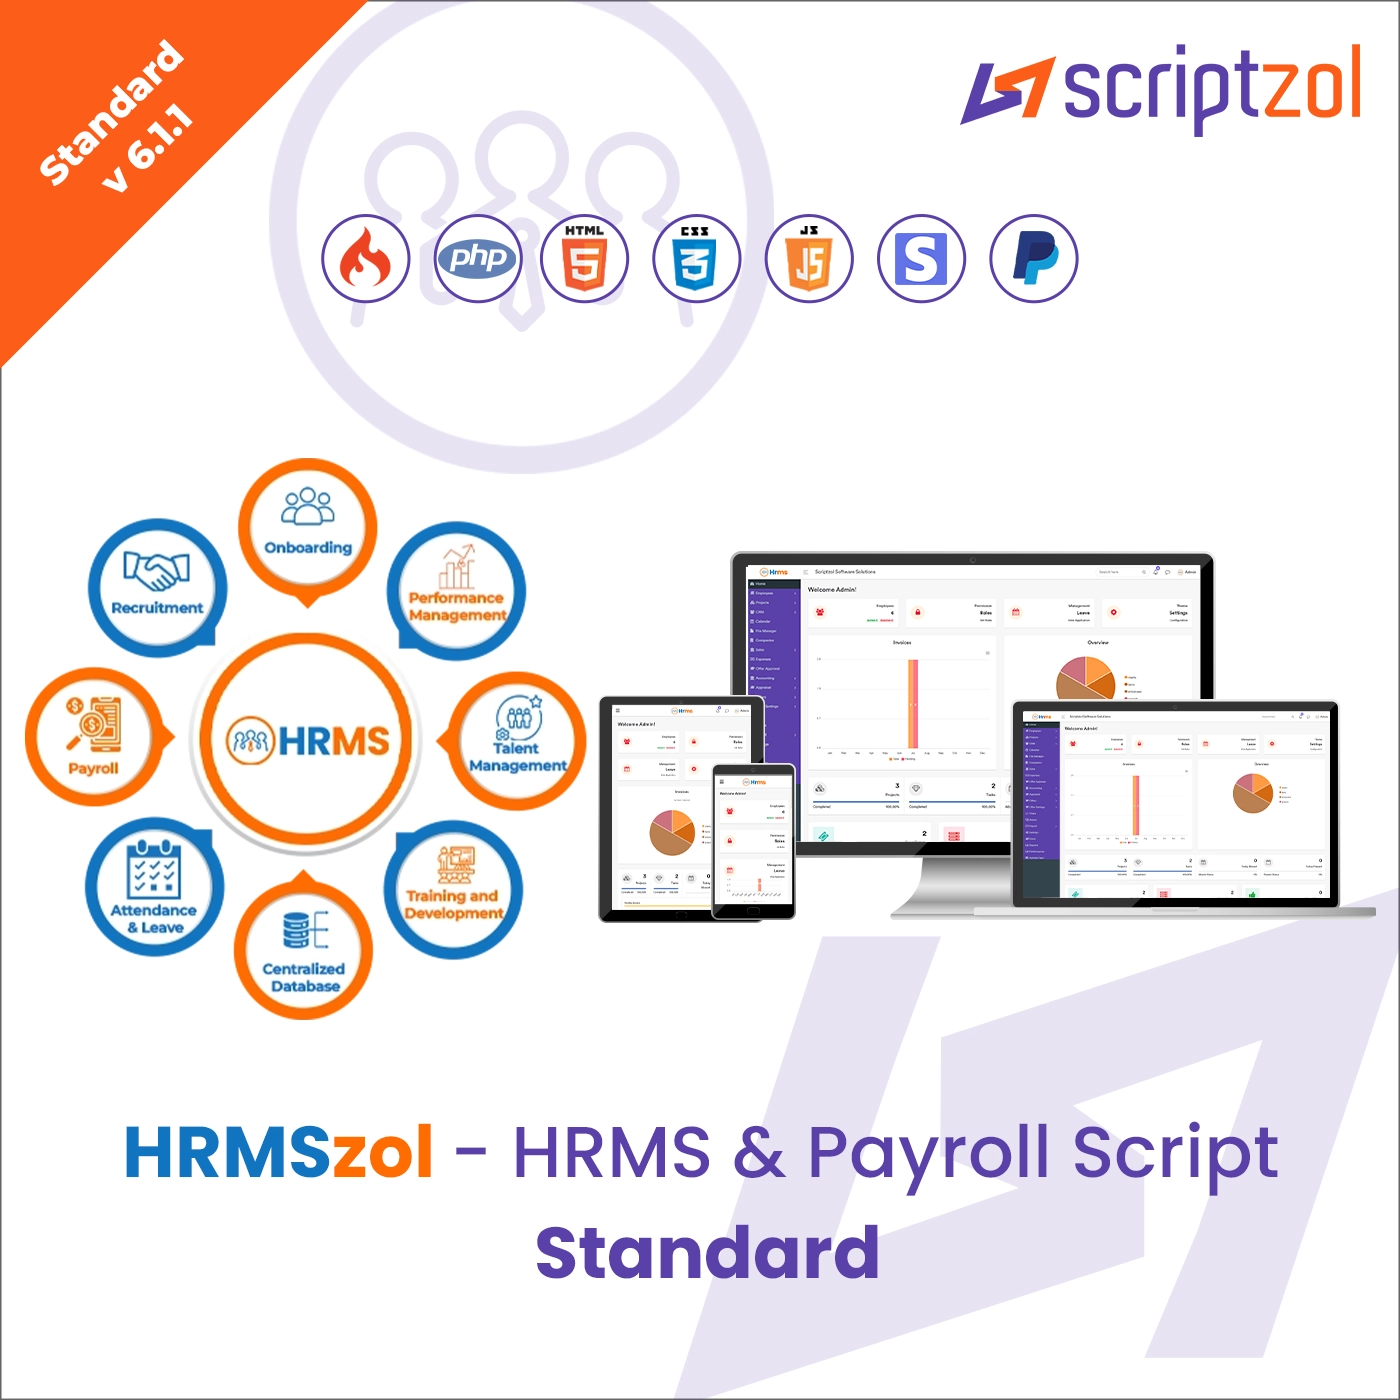 HRMSzol - HRMS & Payroll Script Standard